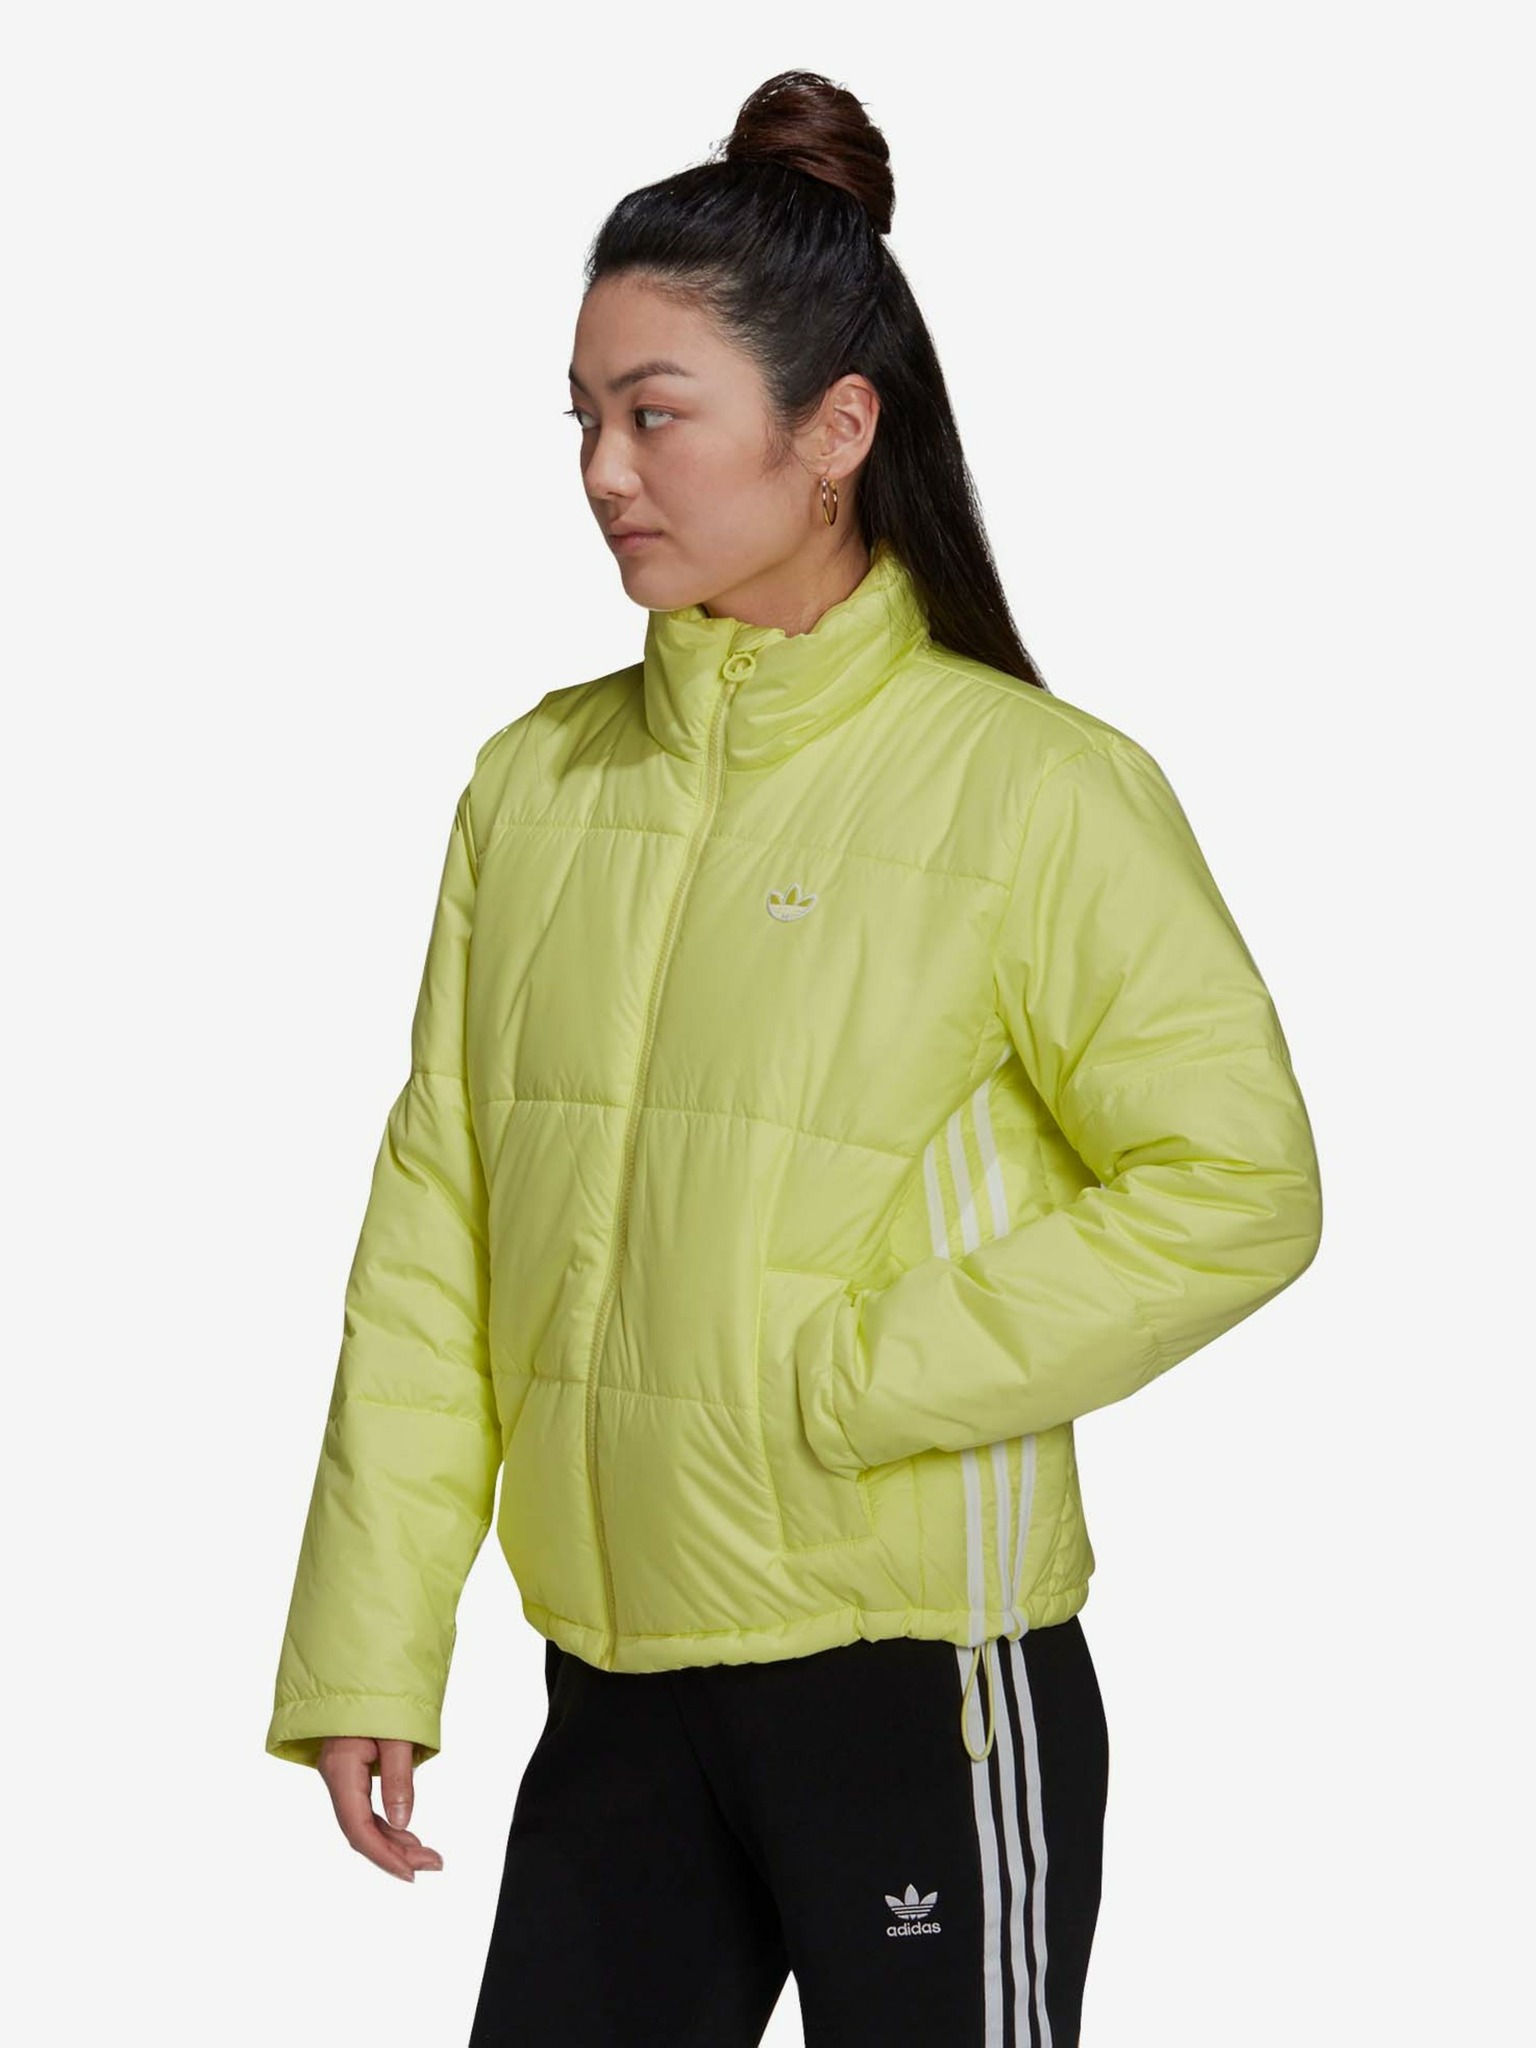 Adidas Originals Superstar Windbreaker Tribe Yellow, Mens, Jacket